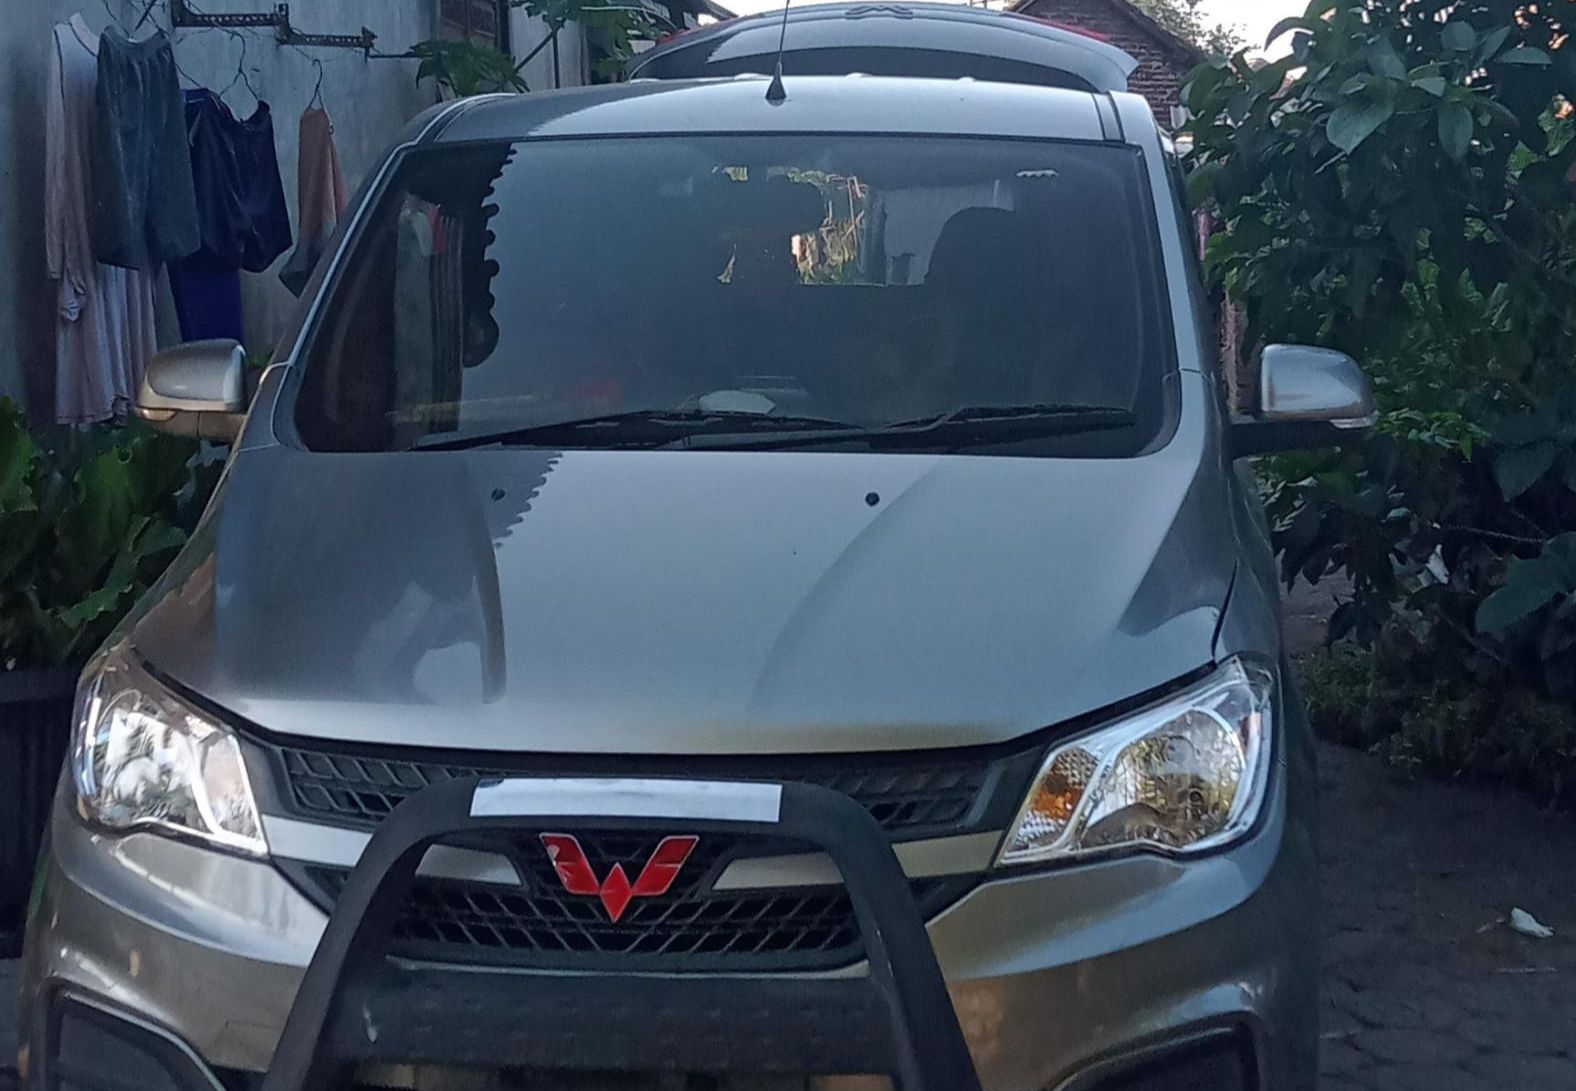 Mobil merk Wulling warna abu-abu milik korban AM yang sempat dinyatakan hilang telah ditemukan polisi di sebuah kos di Surabaya. Foto: Istimewa.